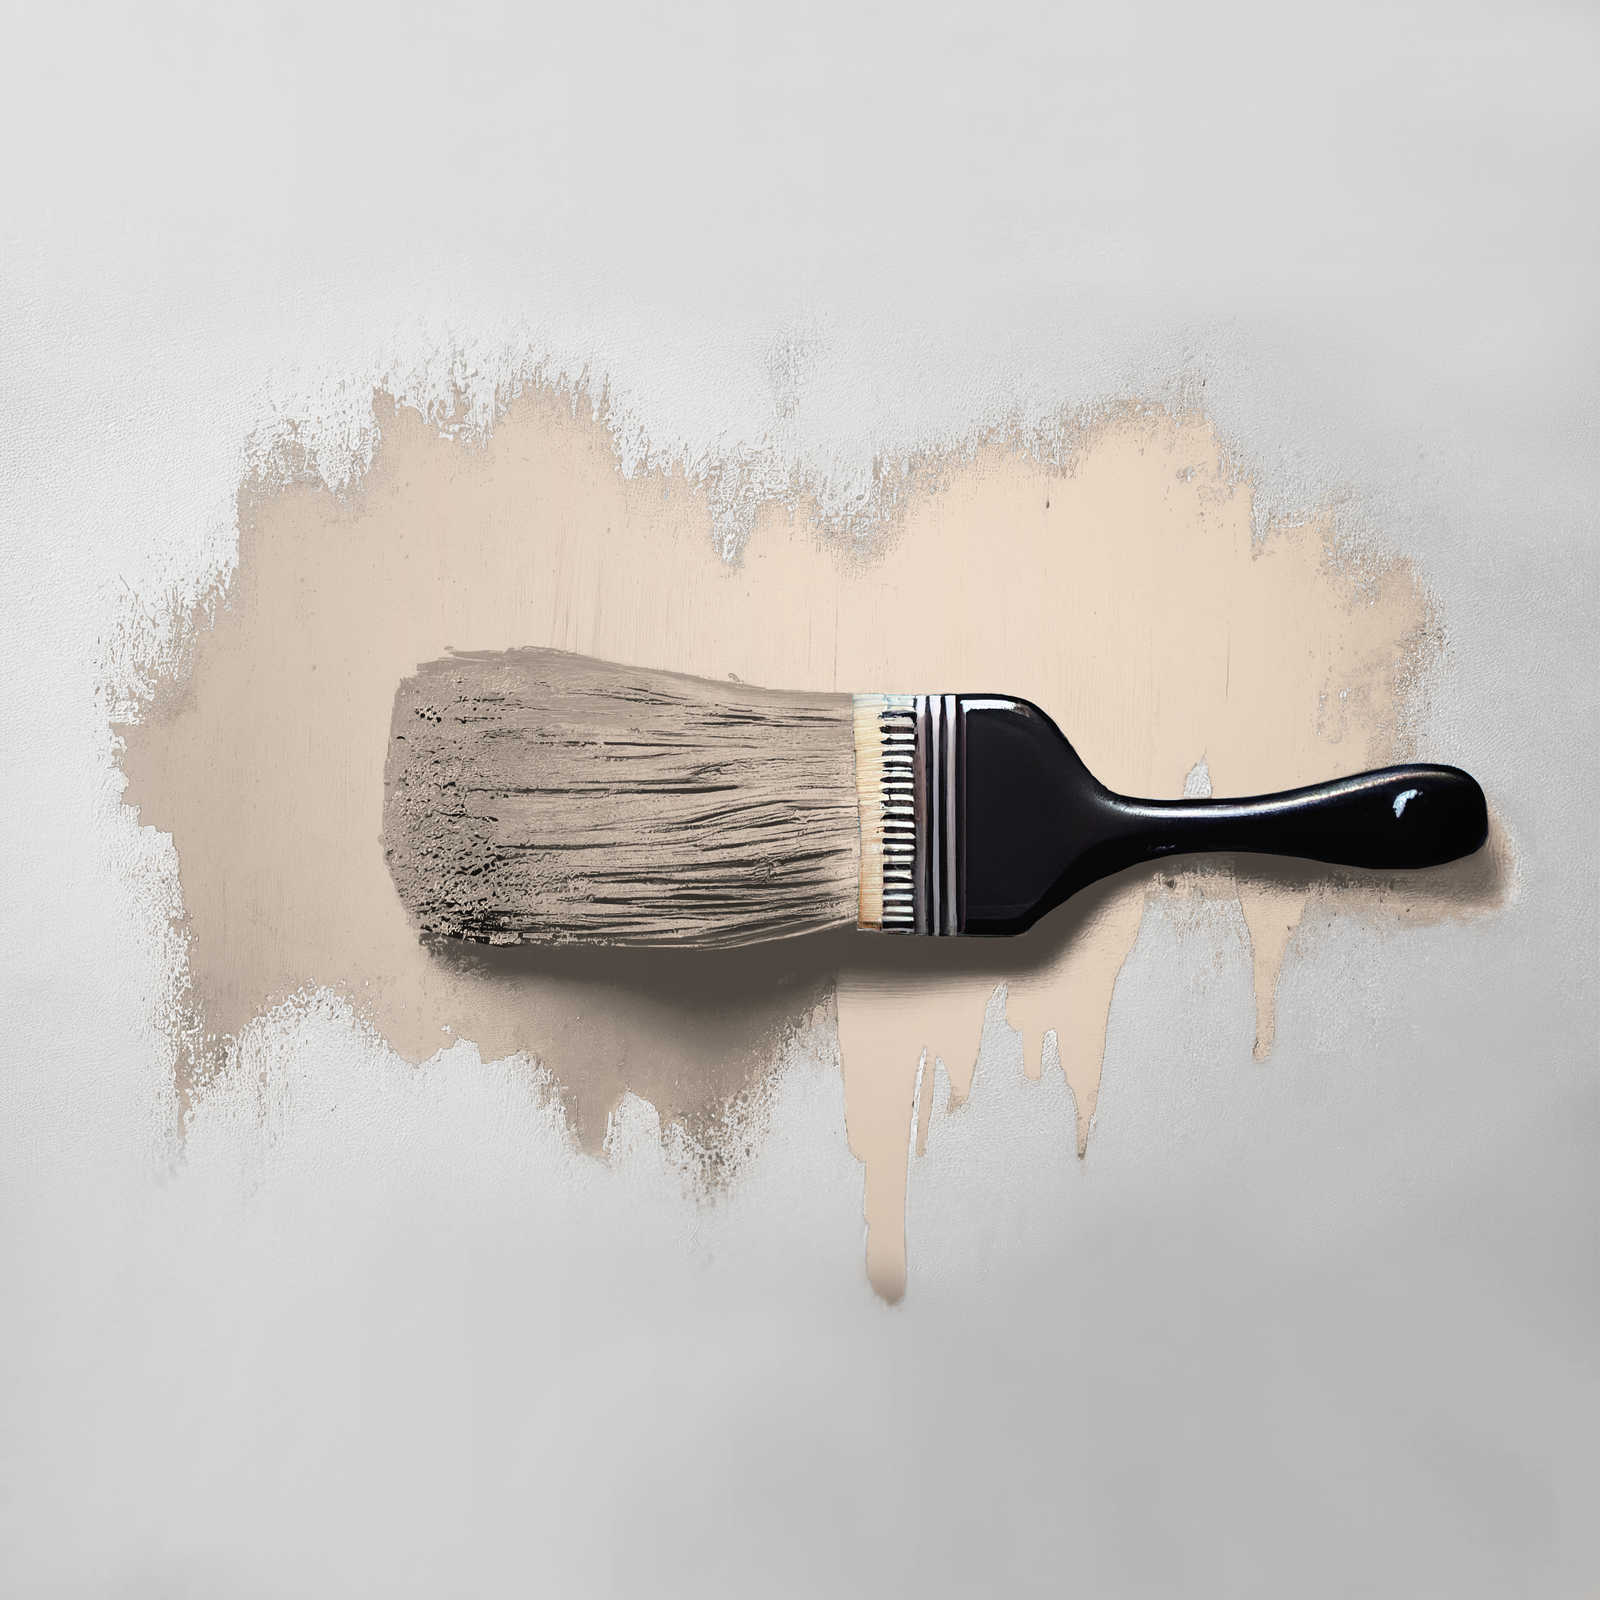             Pittura murale TCK6020 »Chalky Chickpeas« in beige chiaro fresco – 5,0 litri
        